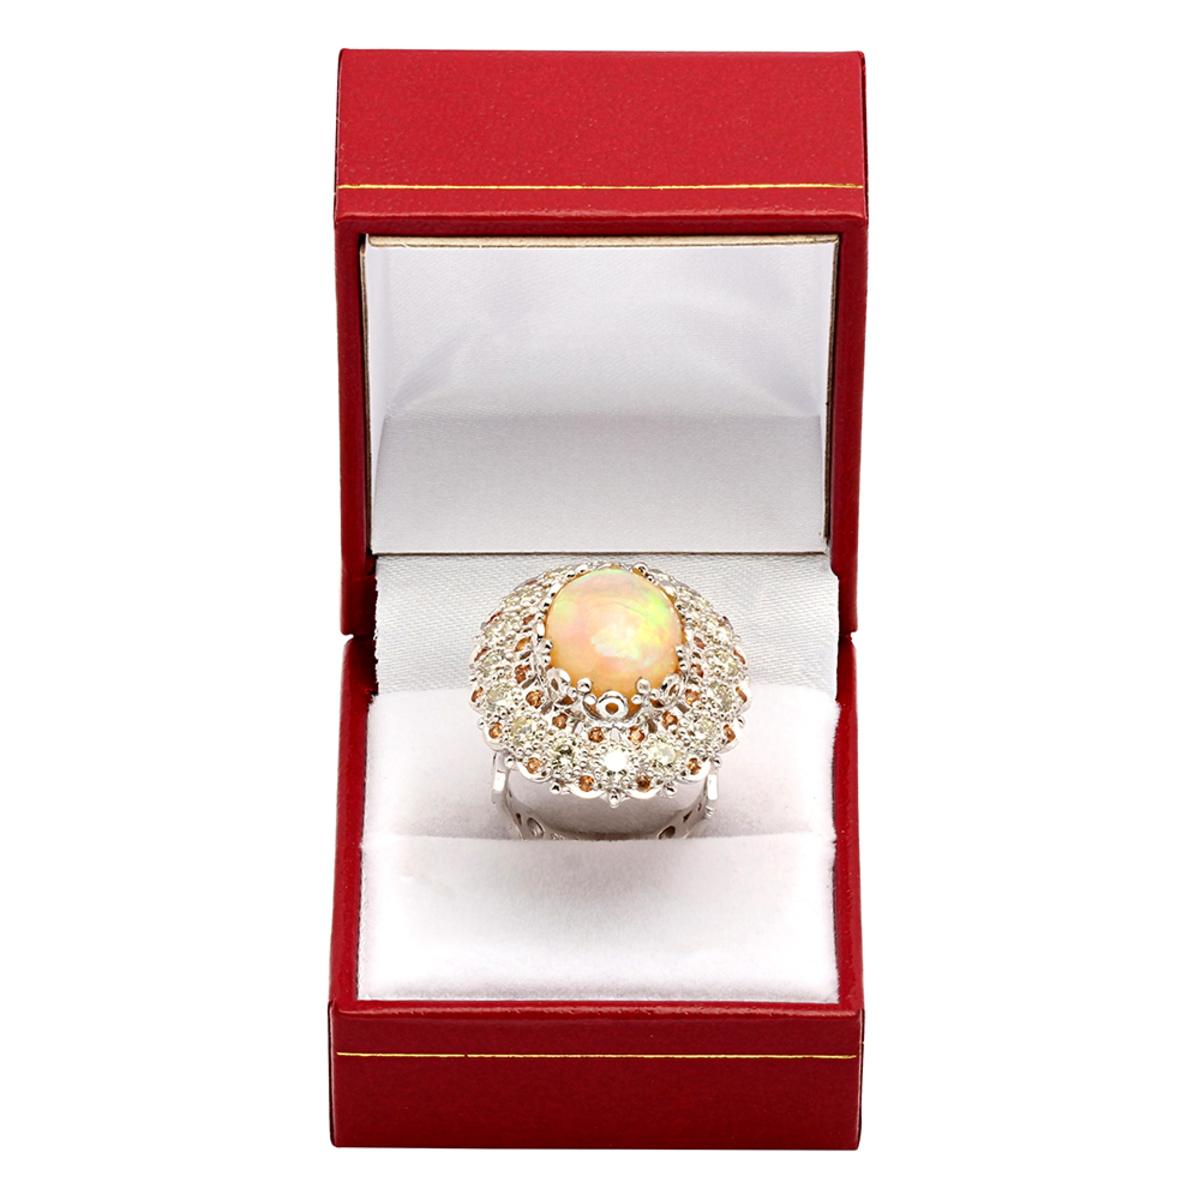 14k White Gold 7.09ct White Opal 0.48ct Orange Sapphire 2.21ct Diamond Ring